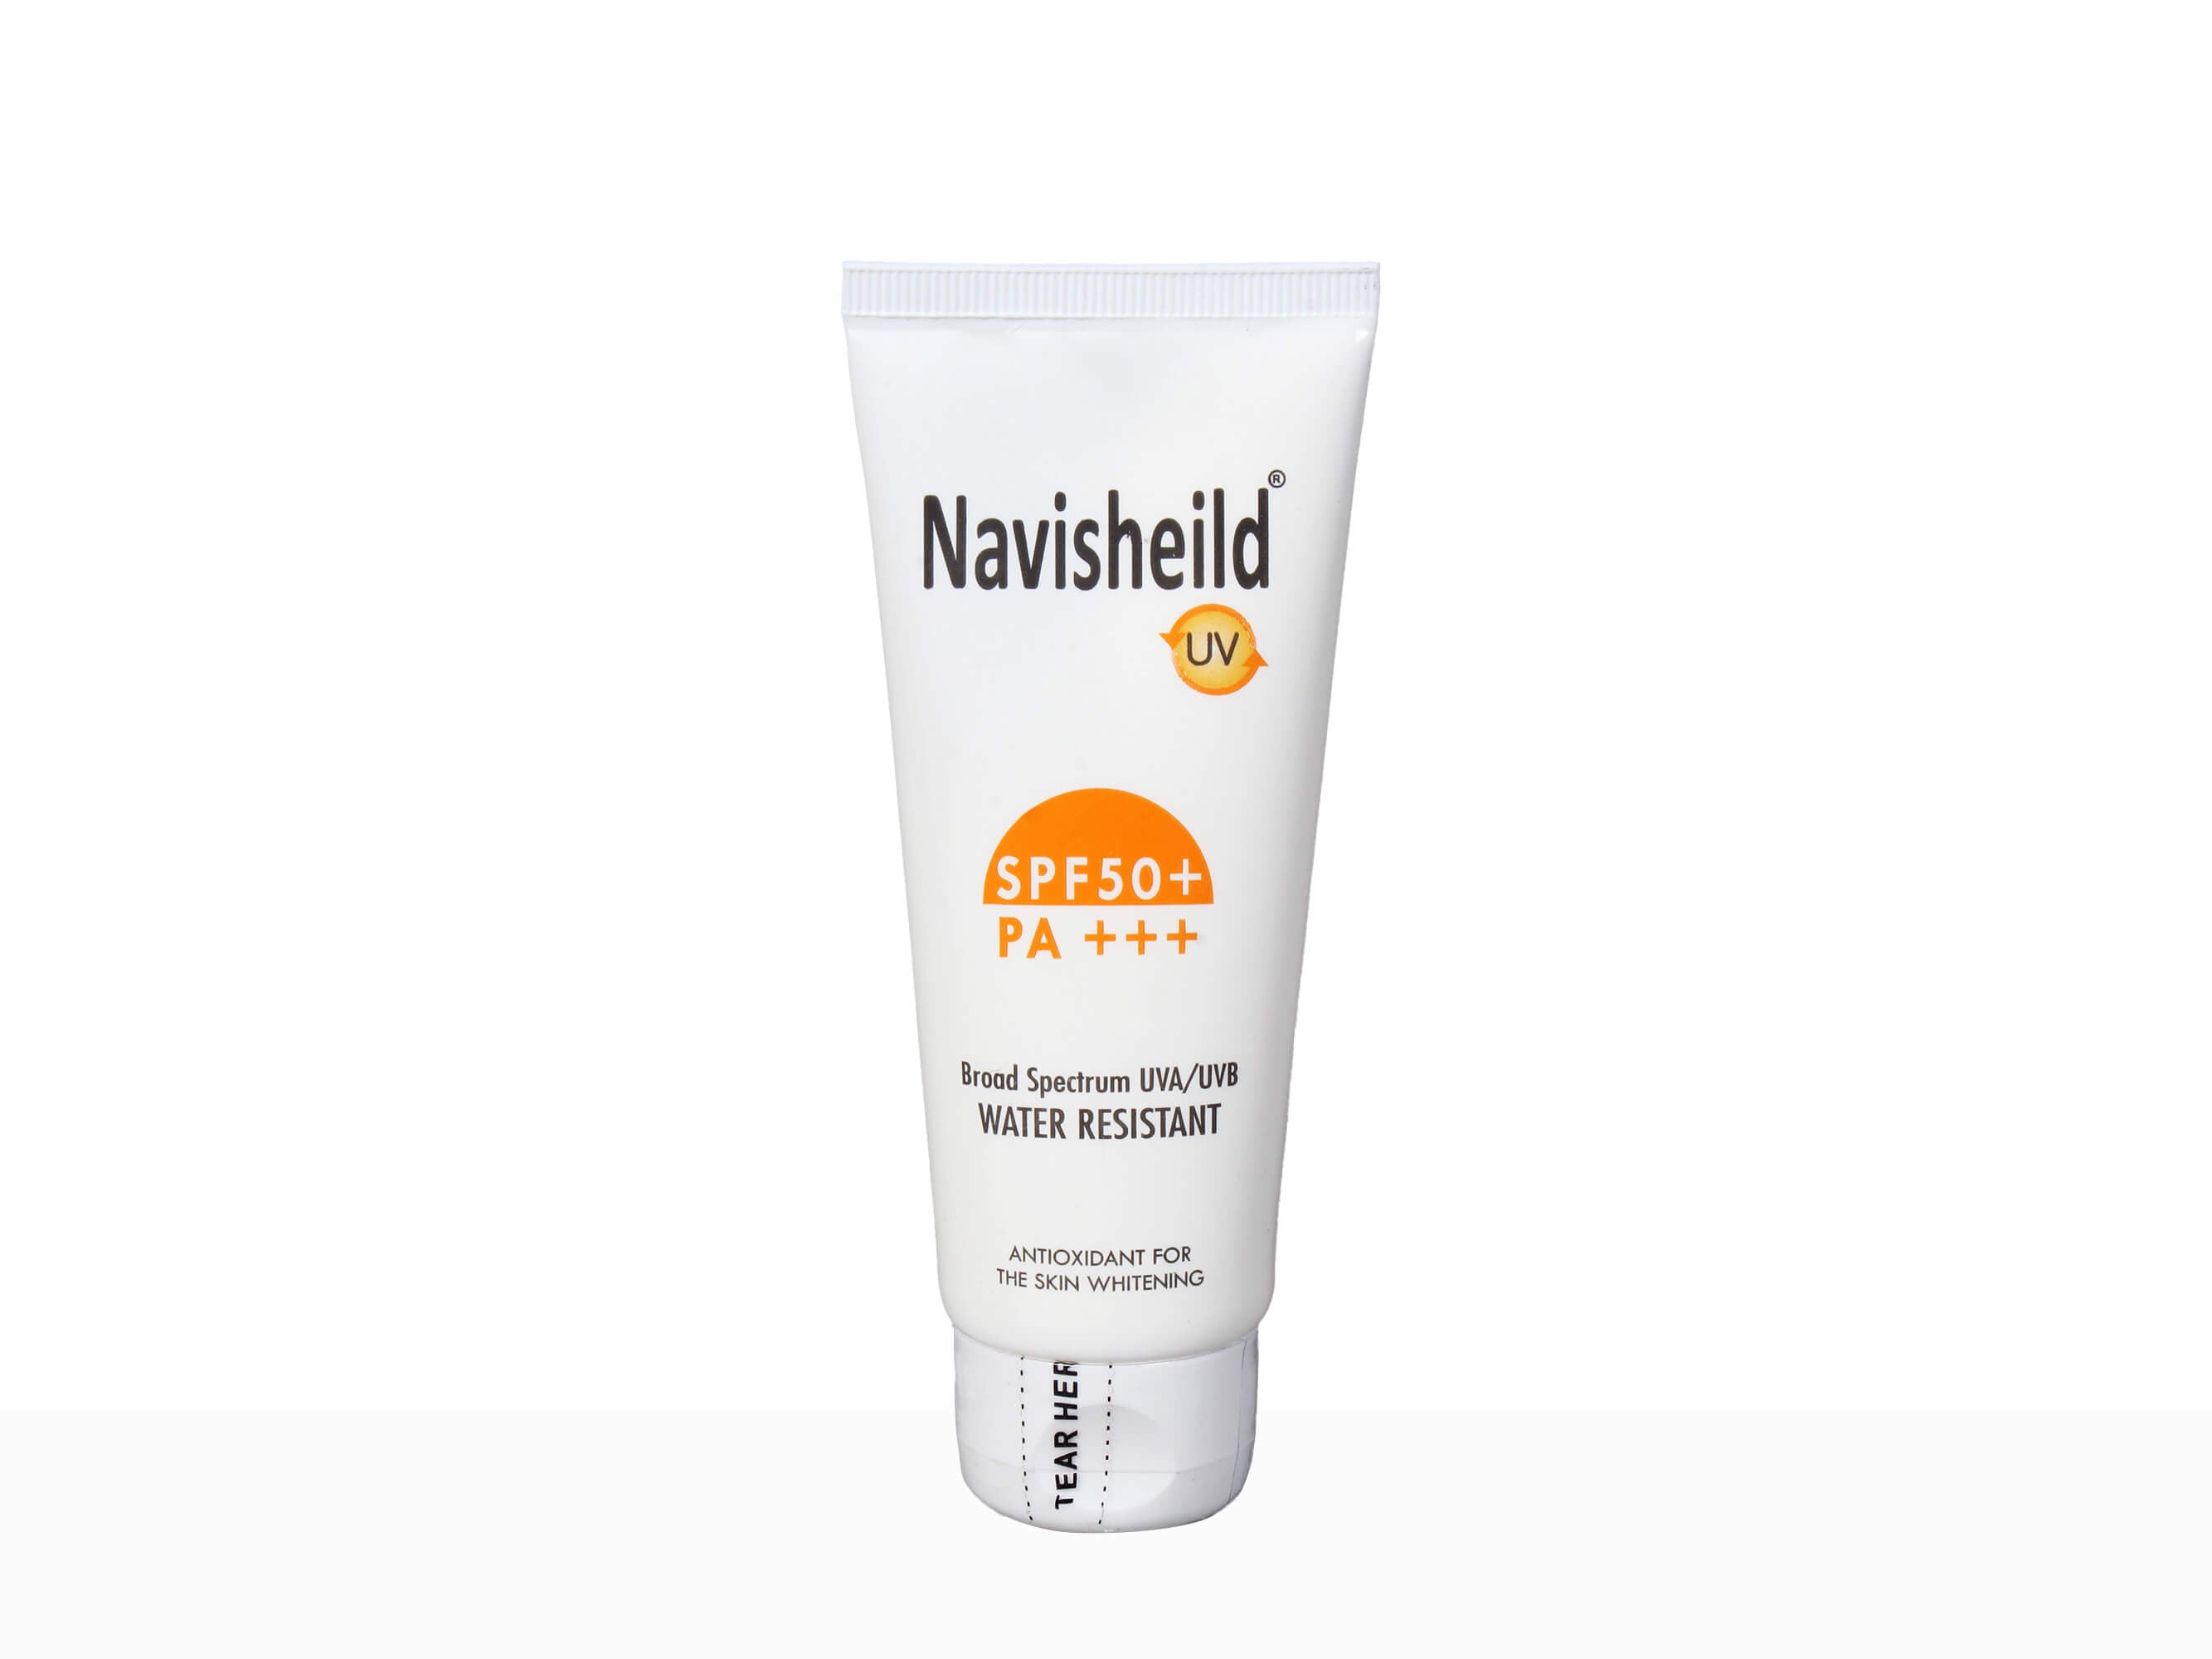 Navisheild UV Sunscreen SPF 50+ PA+++ - Clinikally